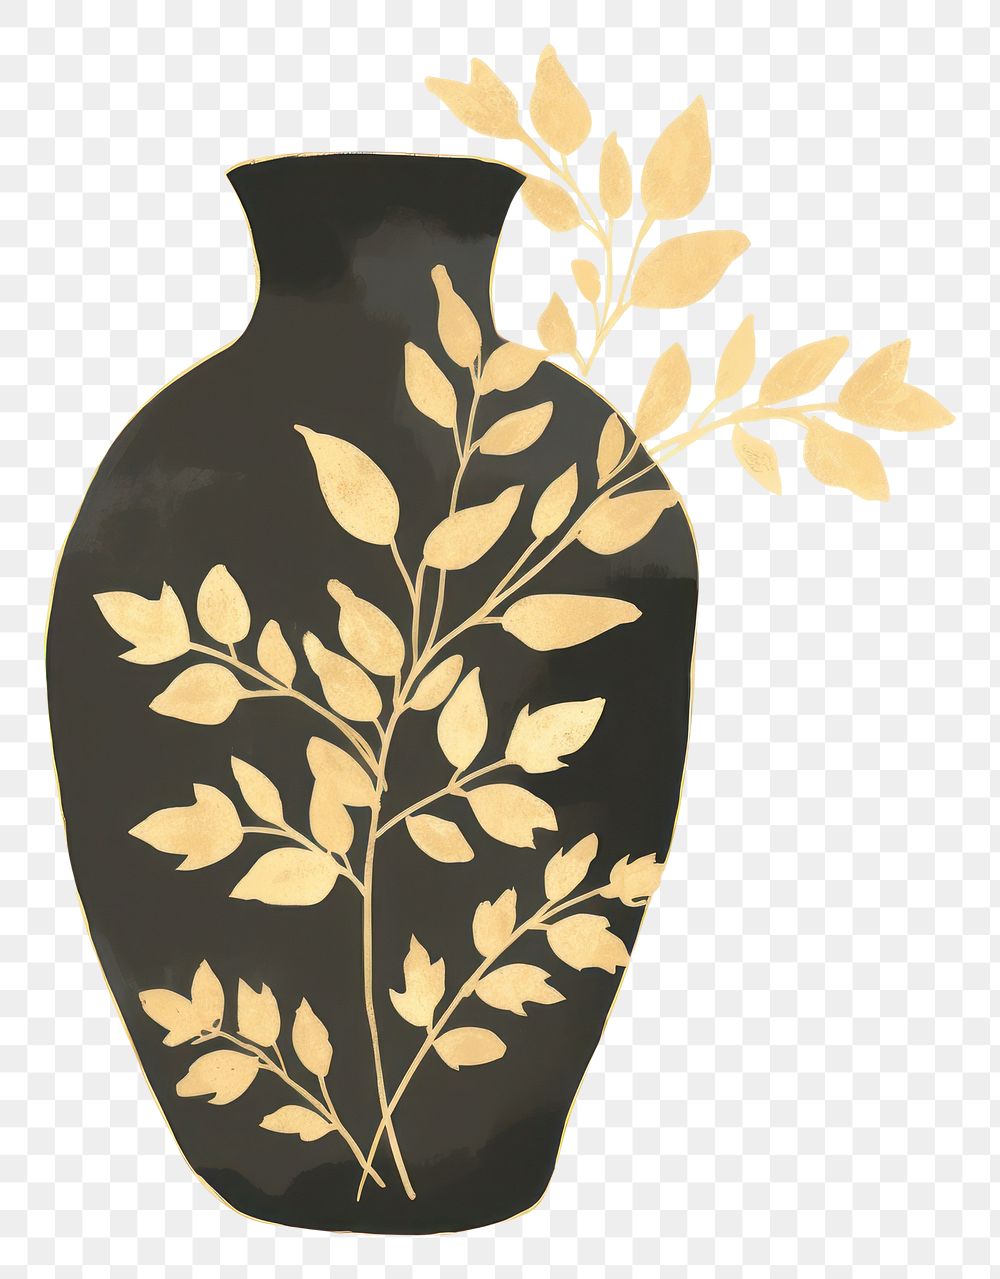 PNG Leaves black vase color in the style of ink folk art-inspired illustrations porcelain pottery white background.